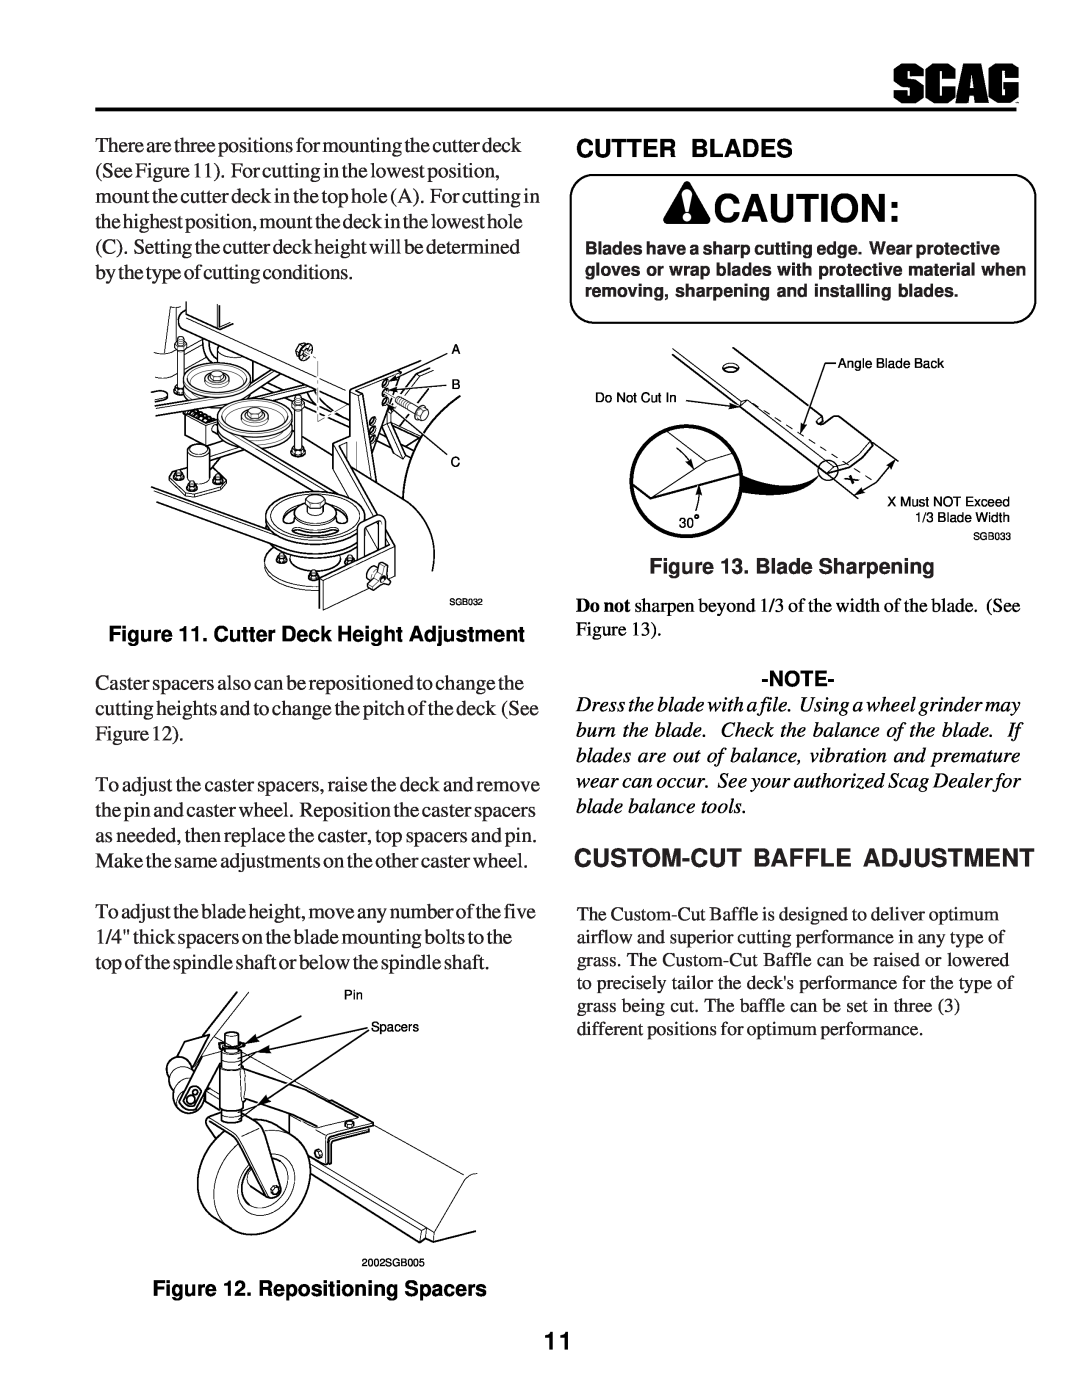 Scag Power Equipment STHM Cutter Blades, Custom-Cutbaffle Adjustment, Cutter Deck Height Adjustment, Blade Sharpening 